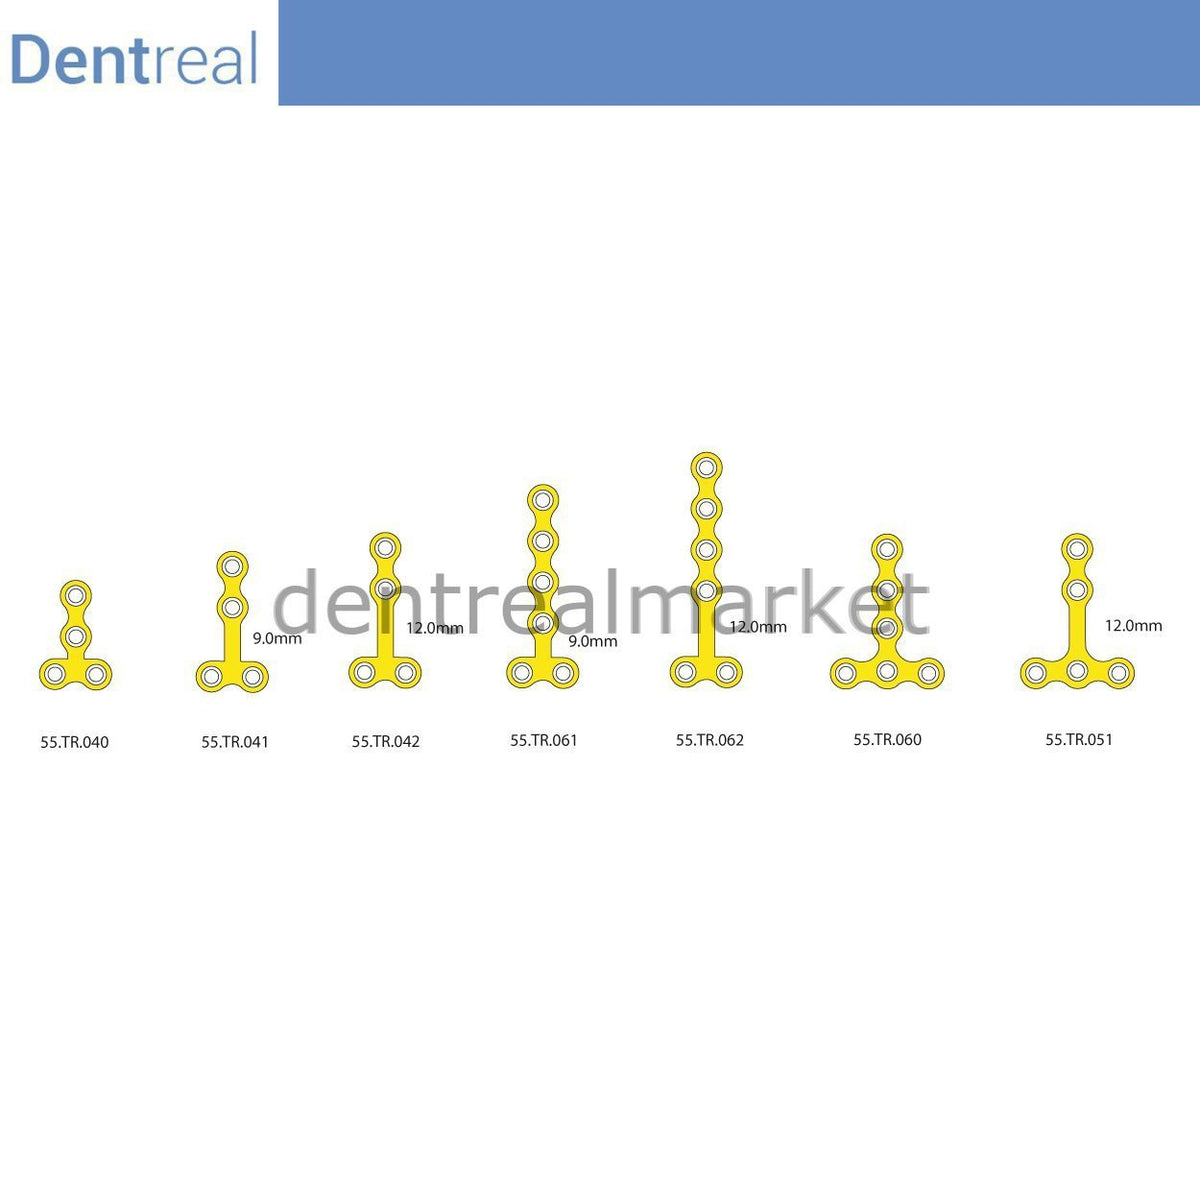 DentrealStore - Dentreal Titanium Maxillofacial Mini Plate Bone Plate 1 mm